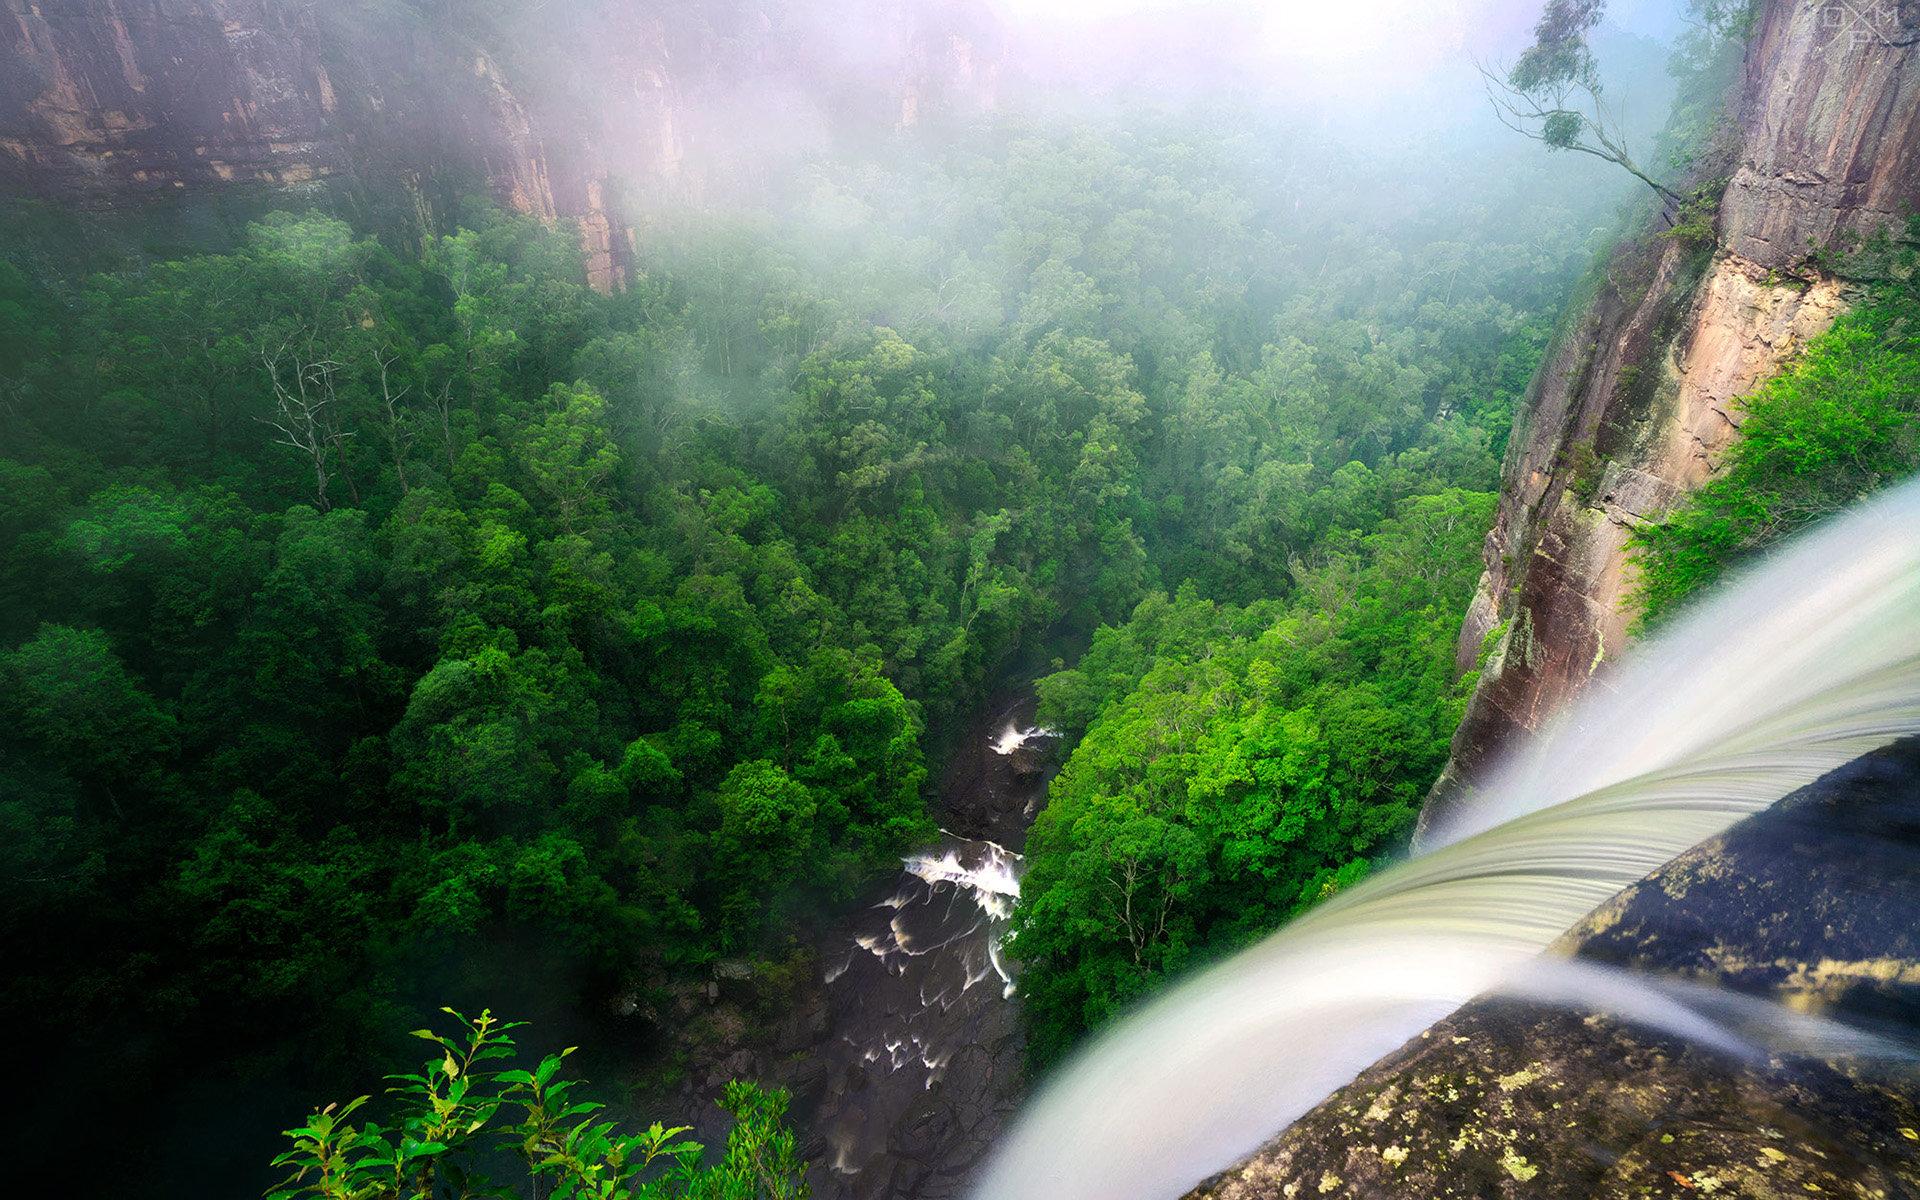 Rainforest wallpaper HD for desktop background